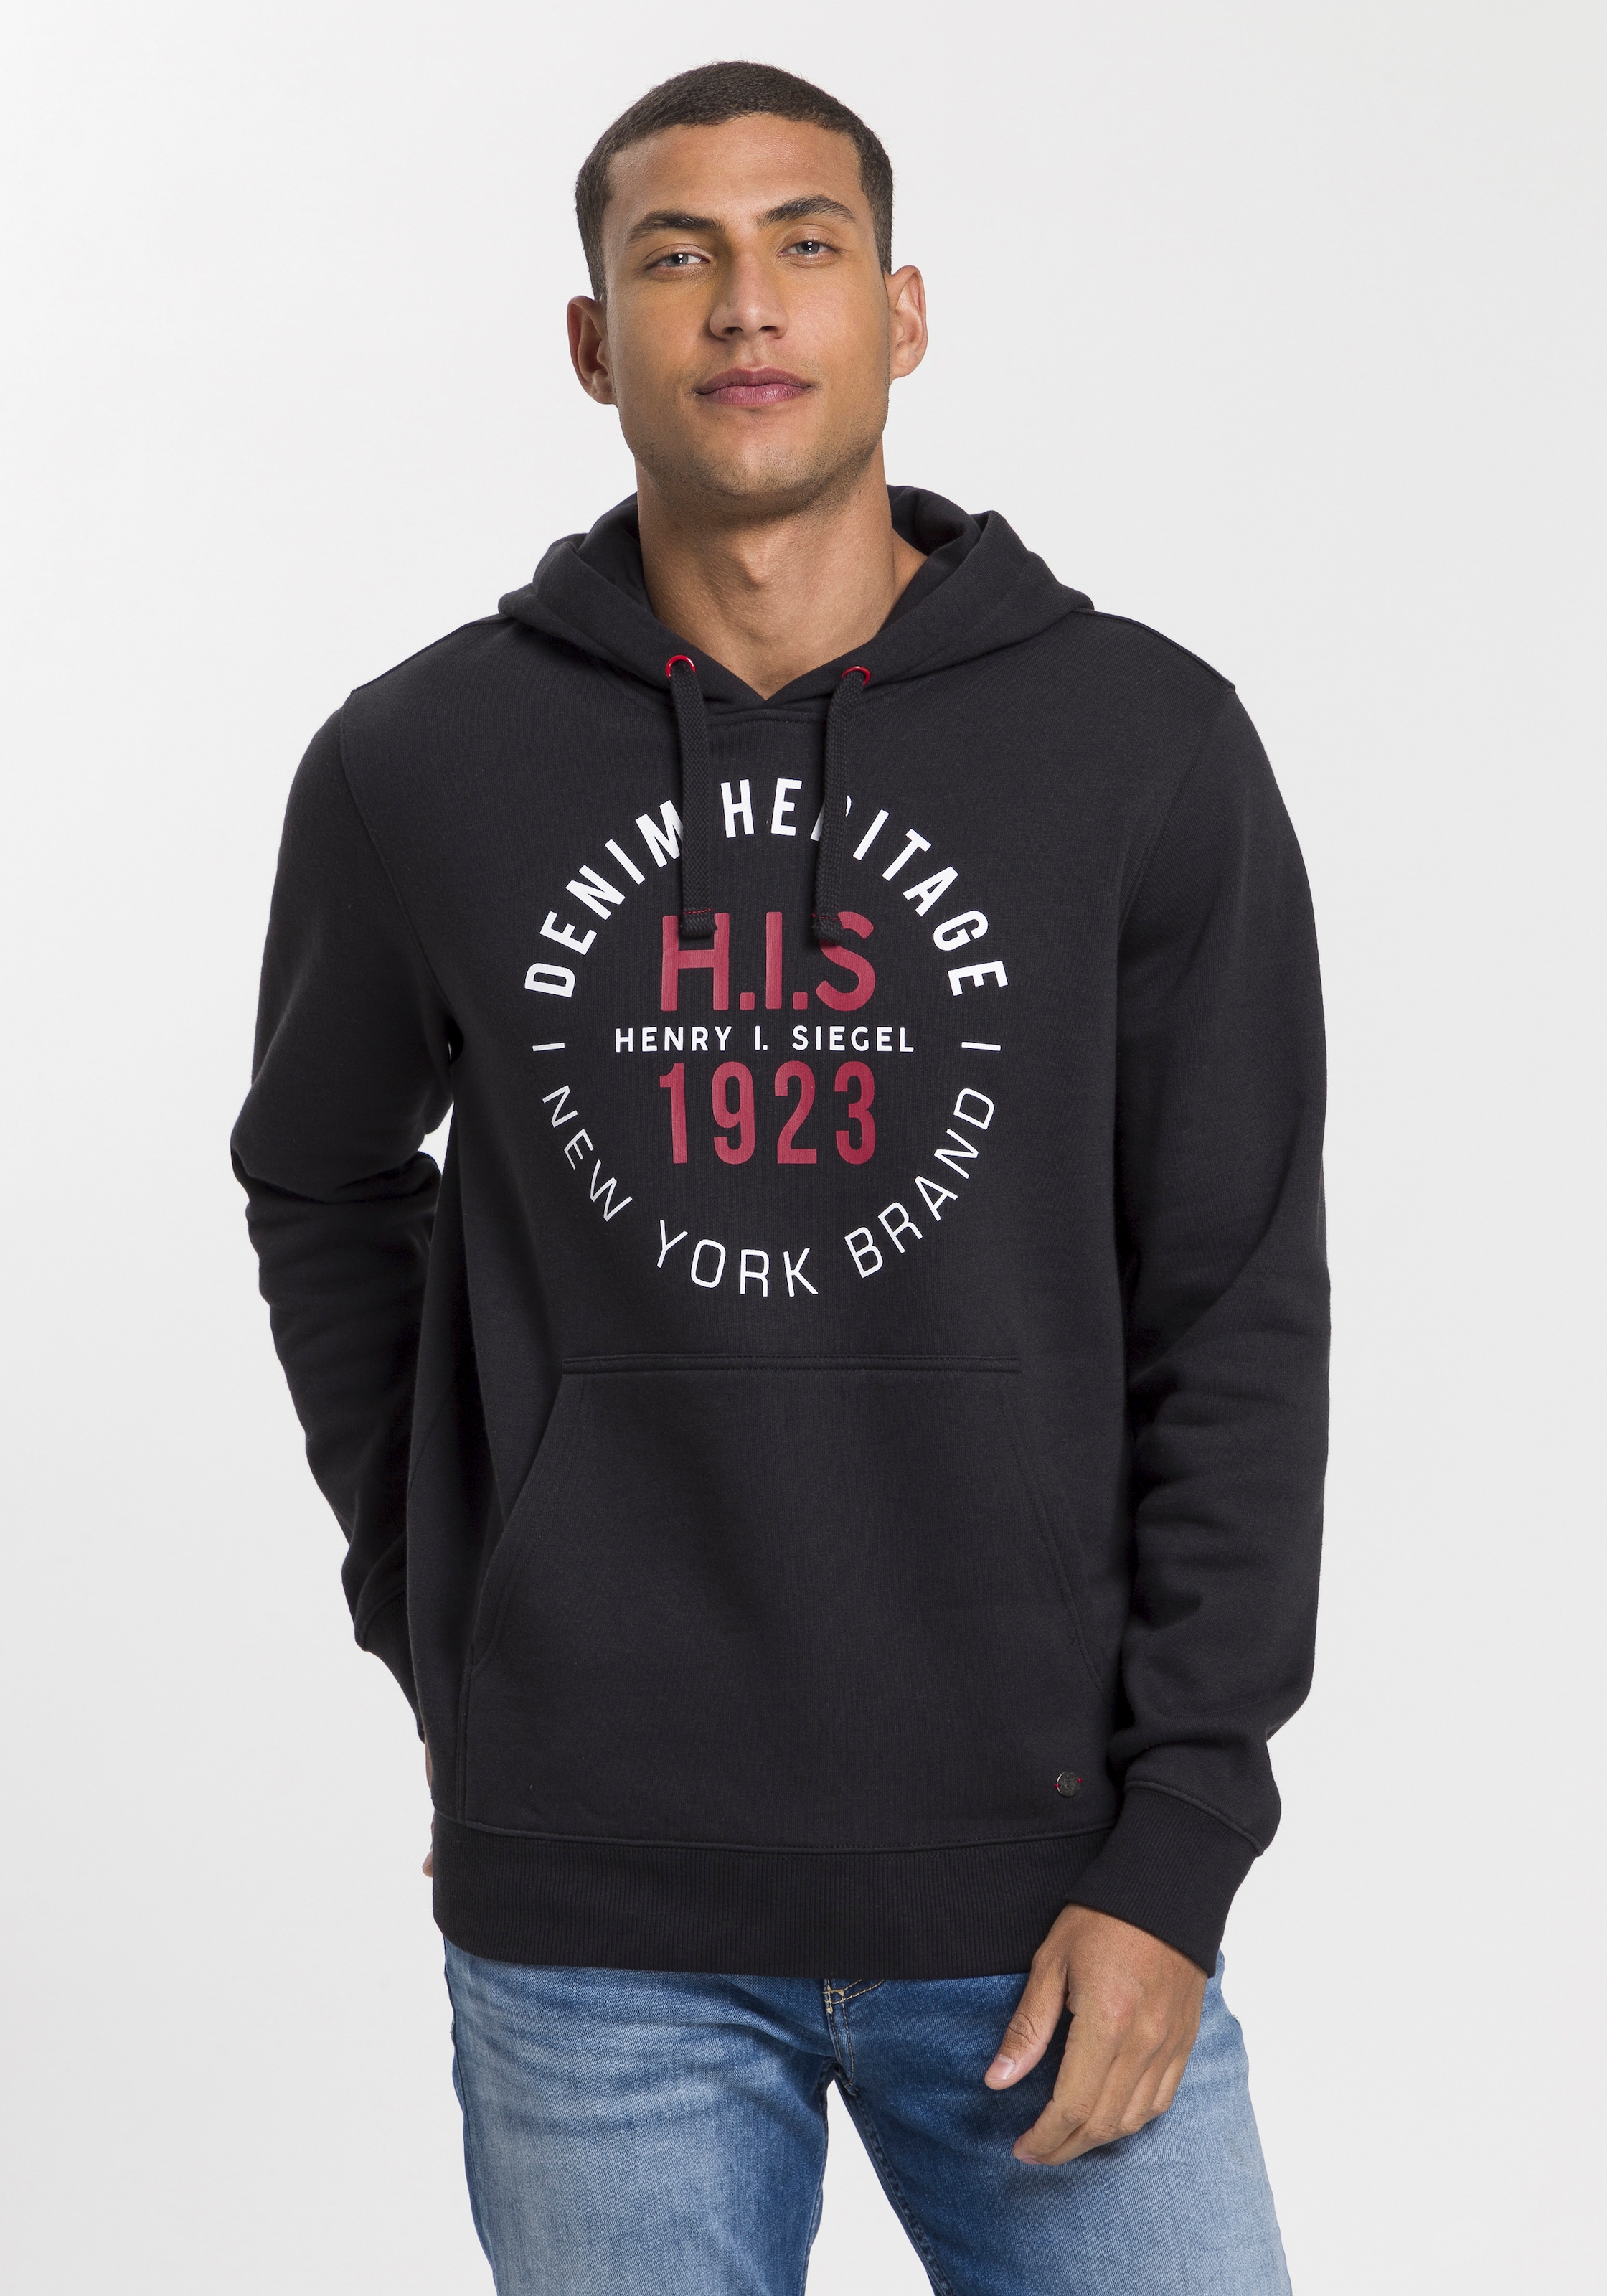 Kordeln Kapuzensweatshirt, H.I.S mit markanten online bei kaufen OTTO